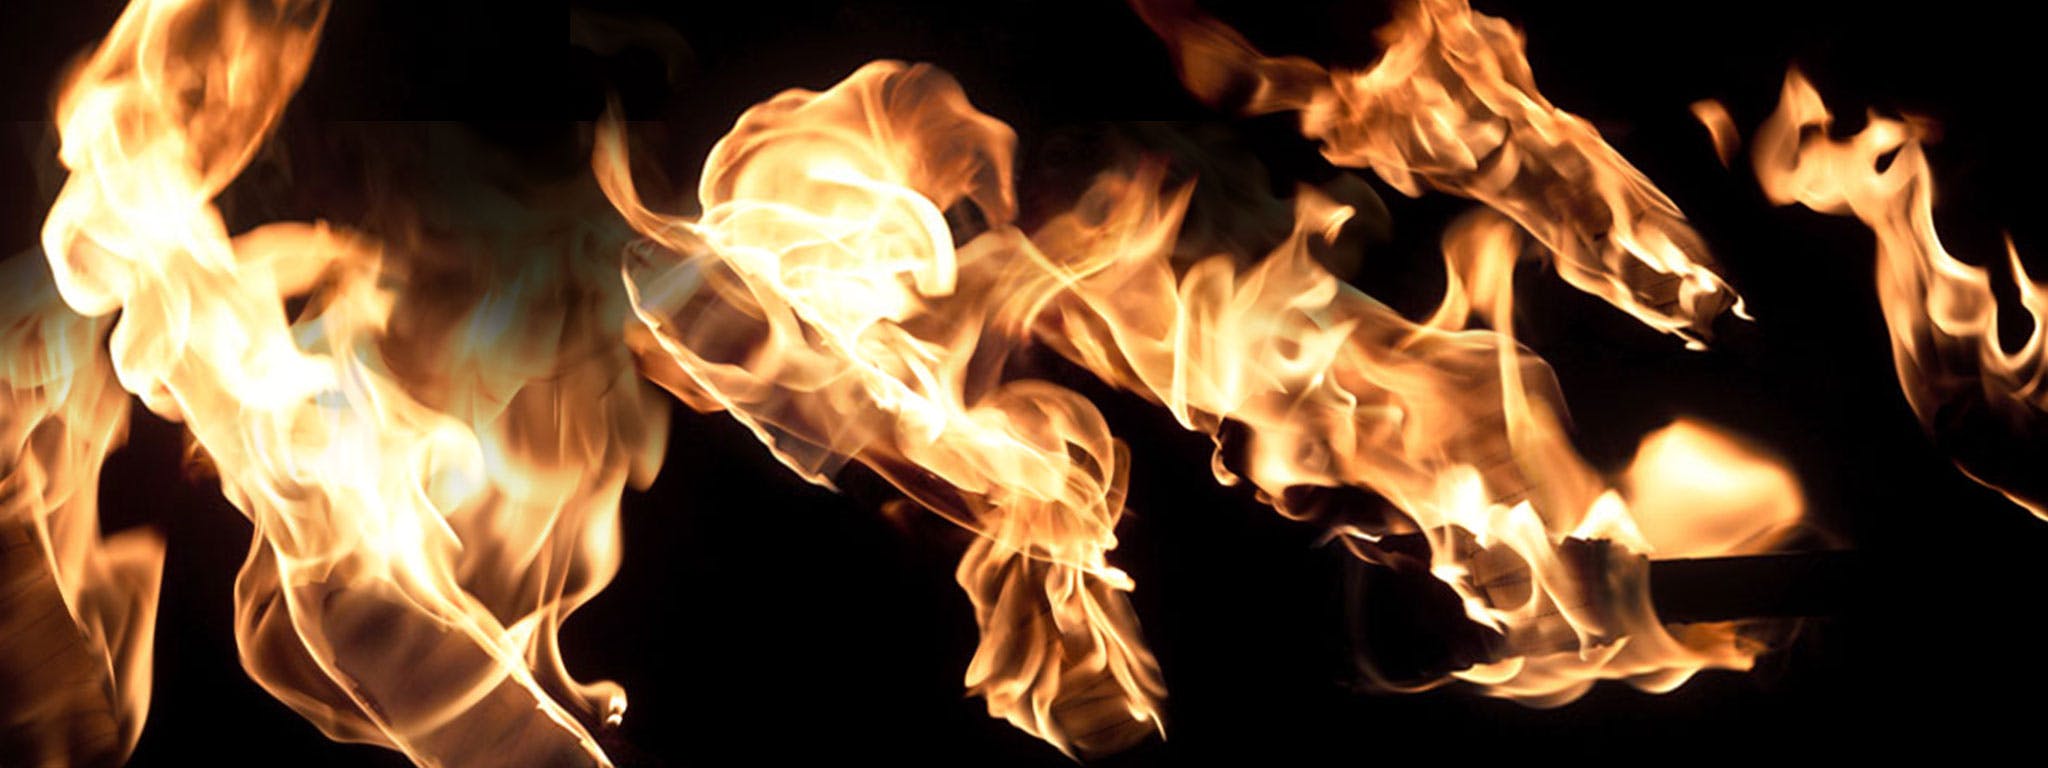 8K Fire Torch VFX Stock Footage